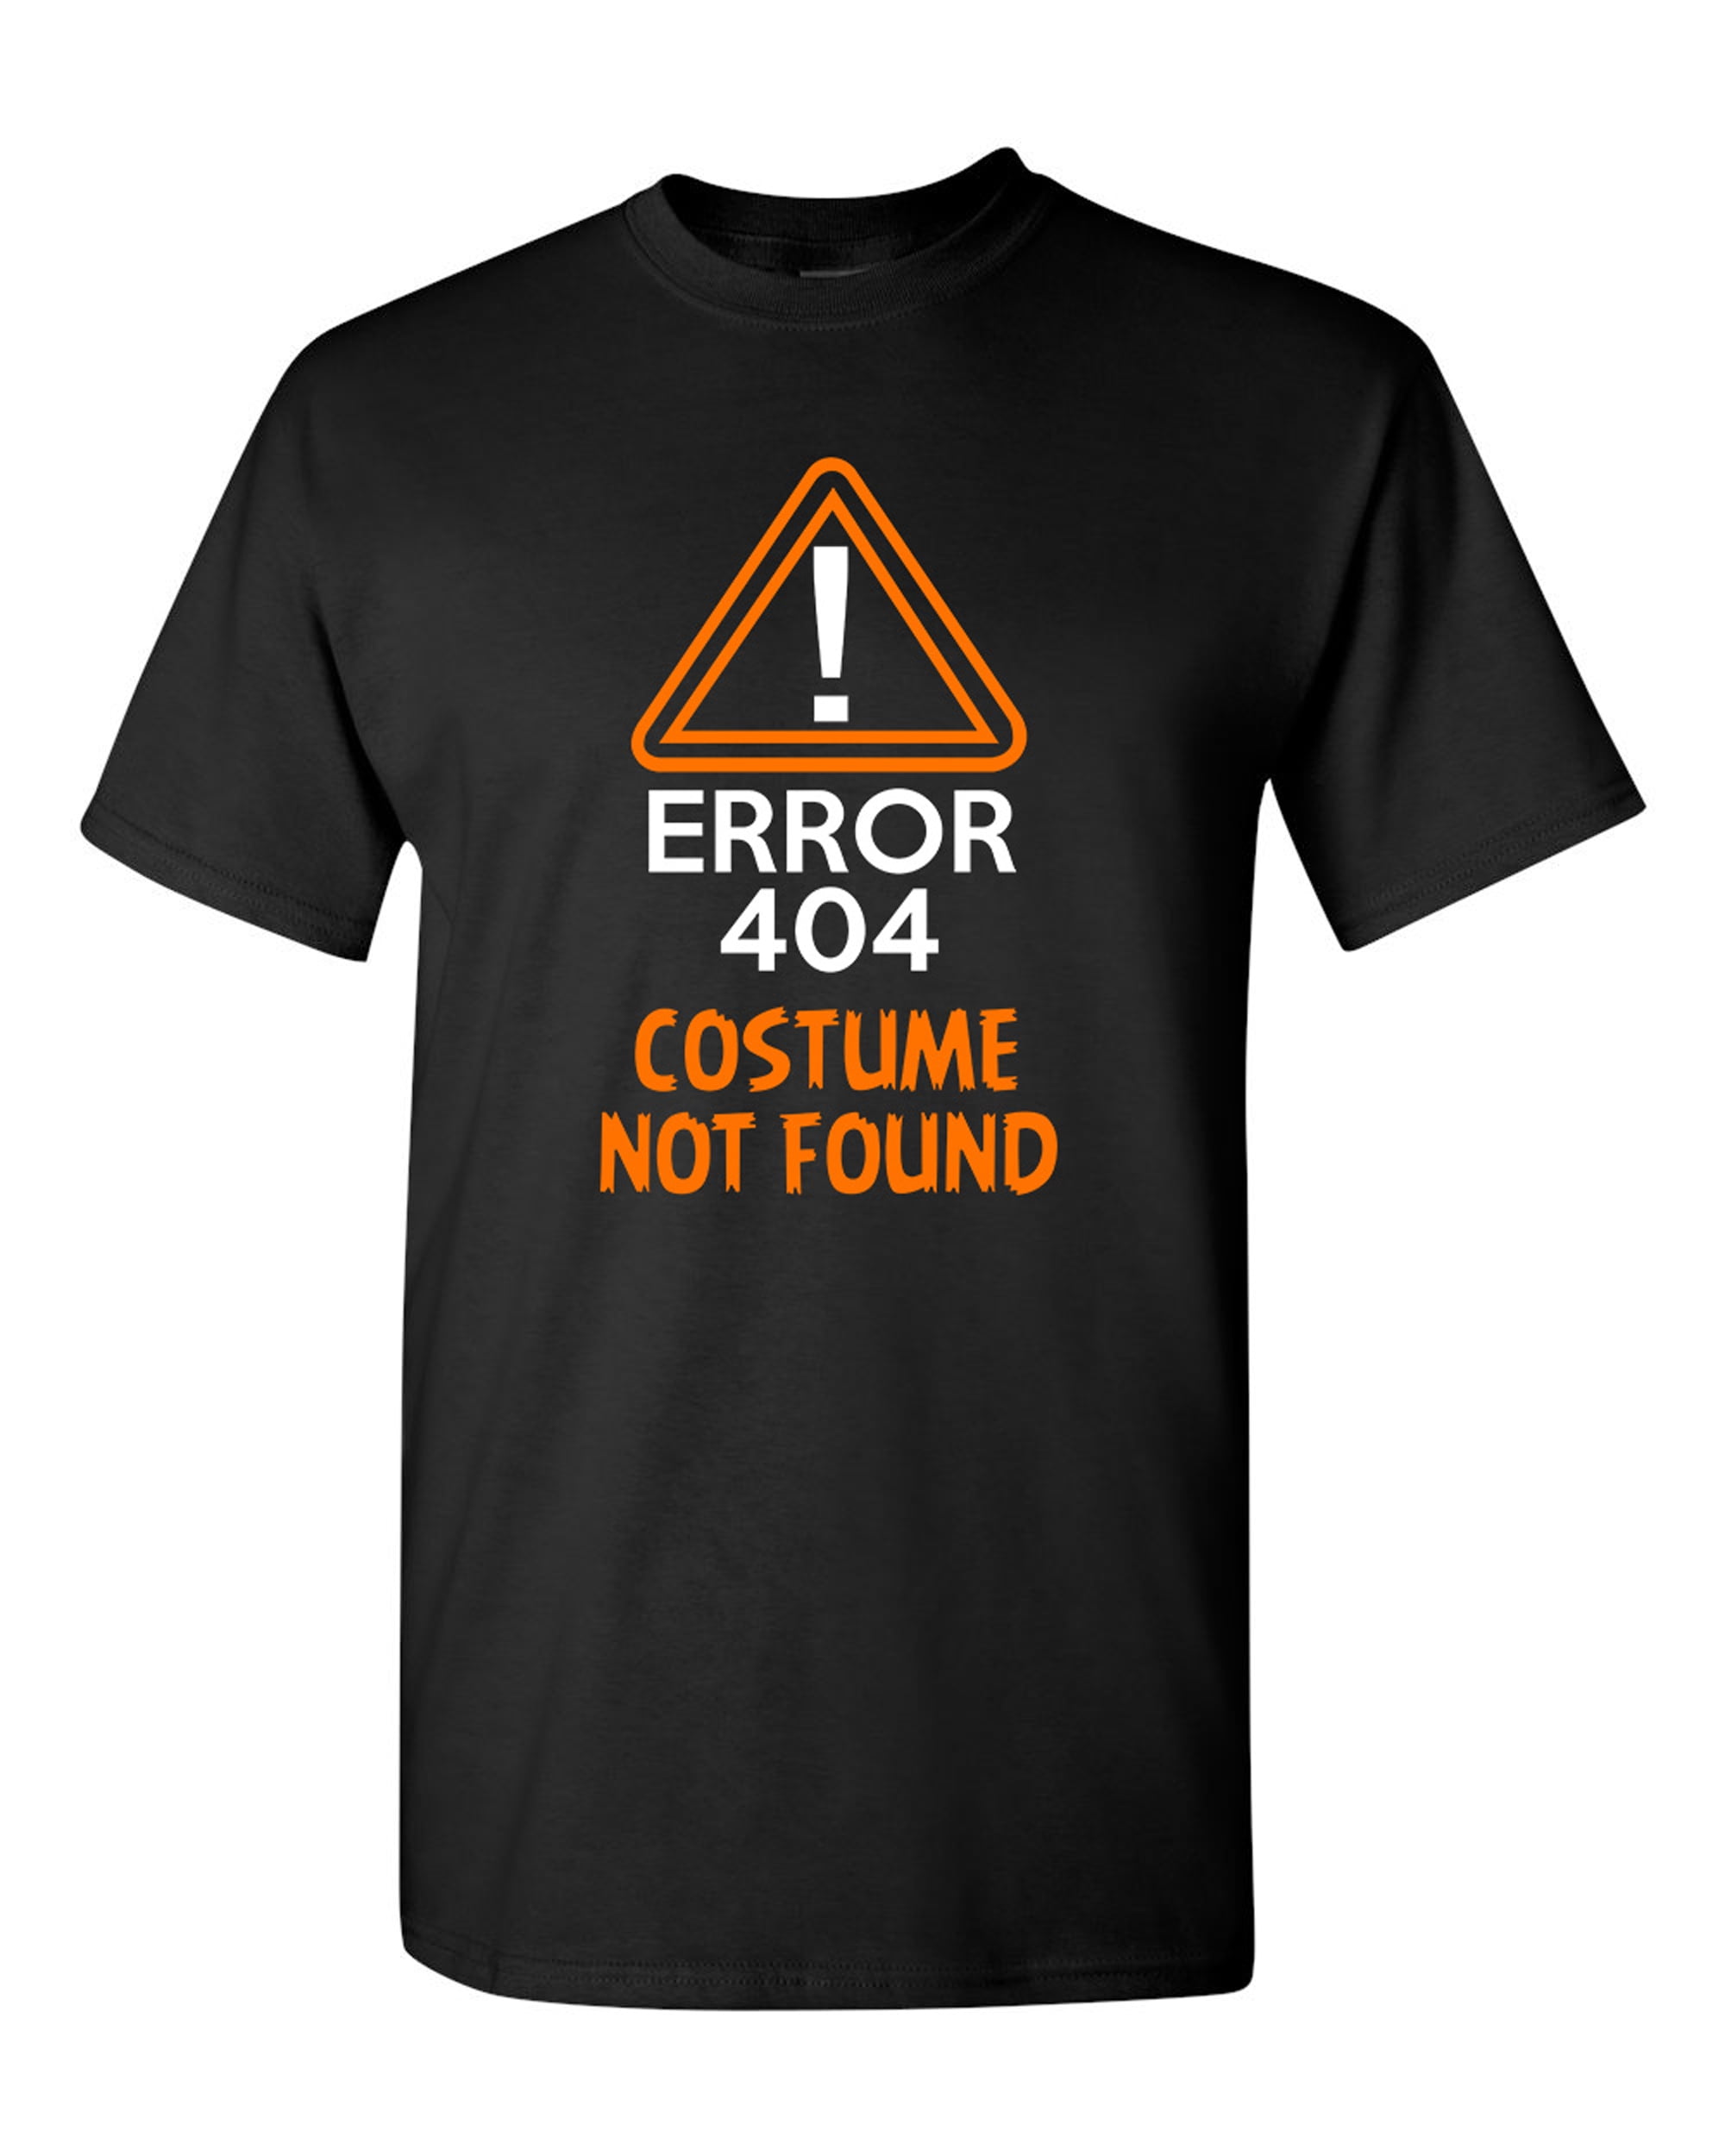 Youth Toddler Error 404 Costume Not Found Shirt Funny Halloween T-Shirt Boy Girl 